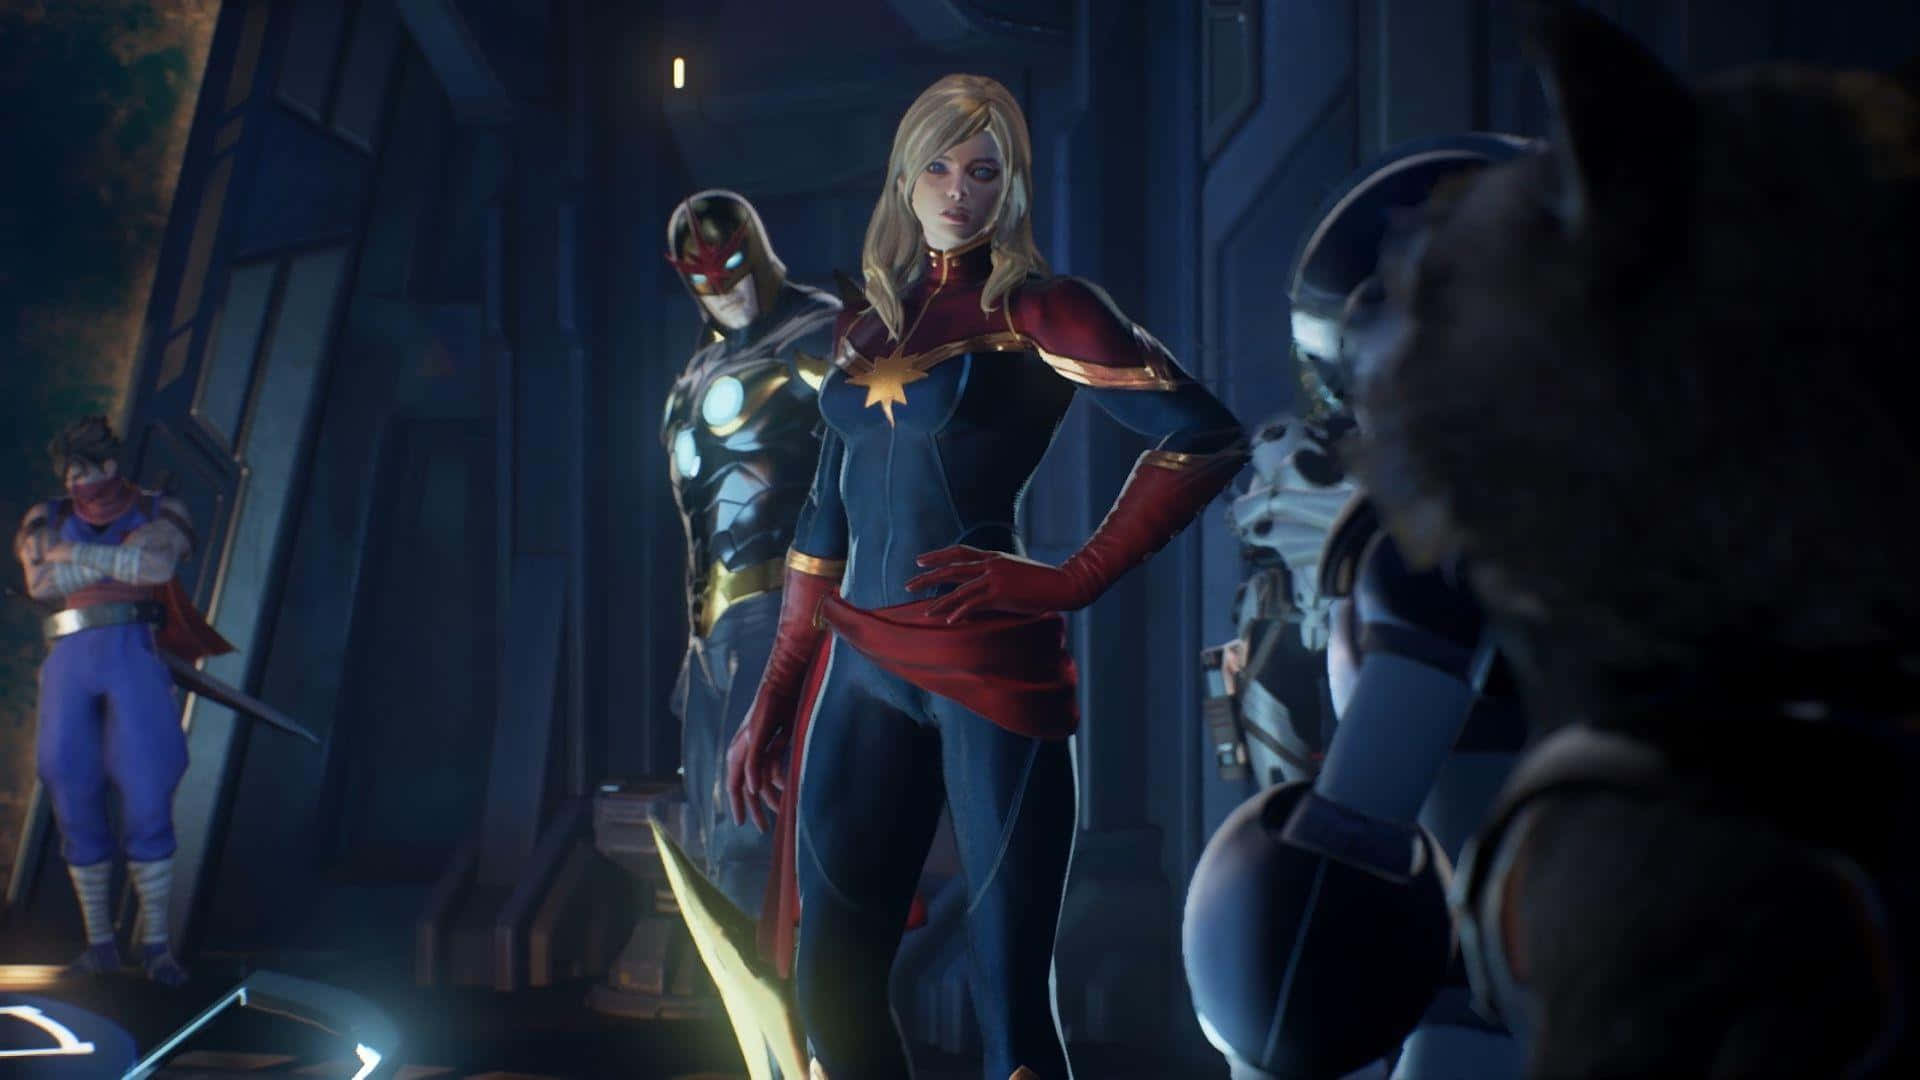 Brie Larson Stars As Captain Marvel In The Epic Marvel Studios Movie. Wallpaper